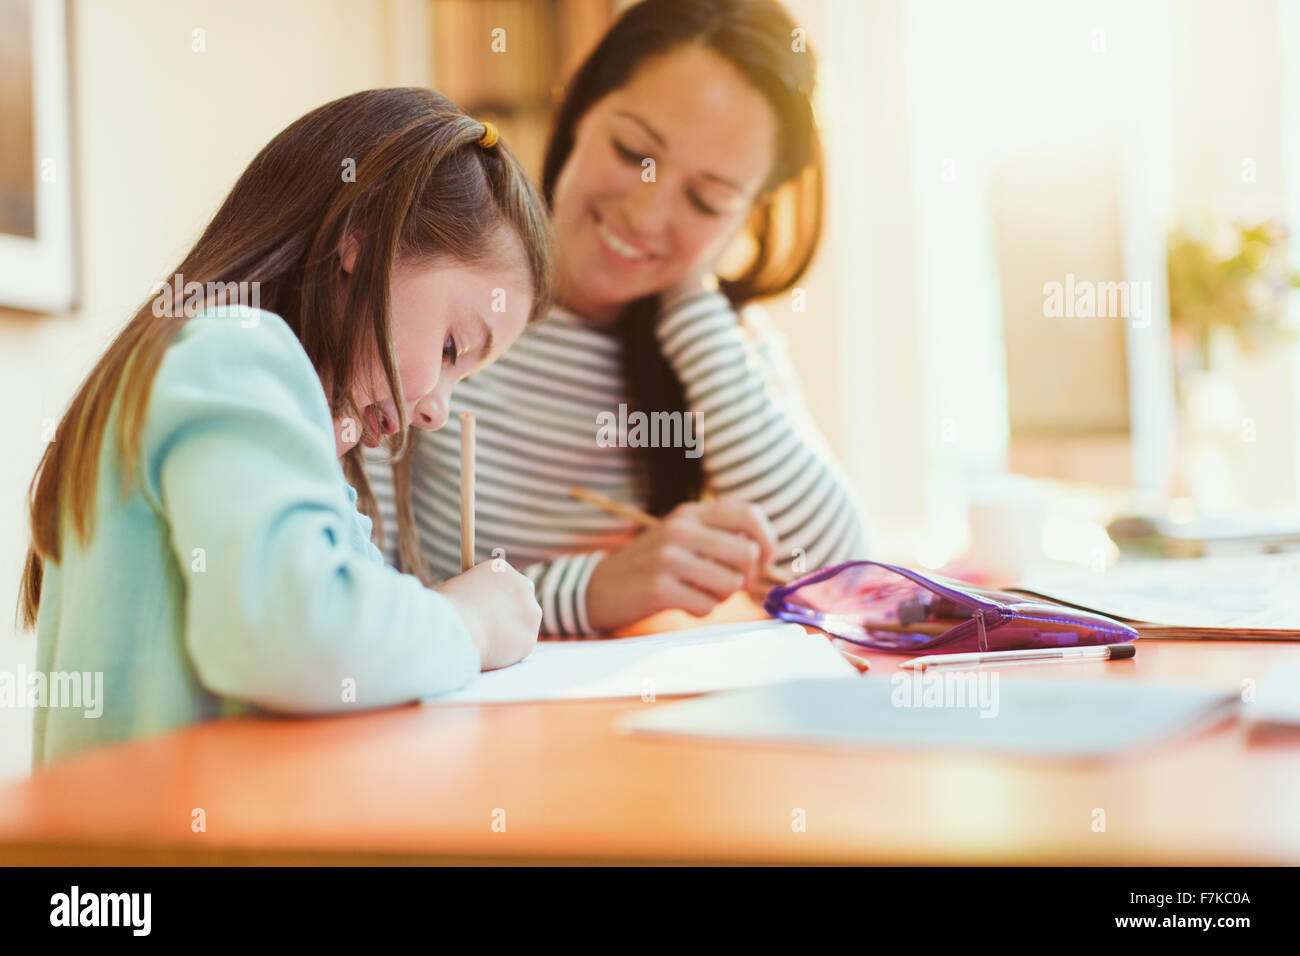 Mother watching daughter do homework Stock Photo